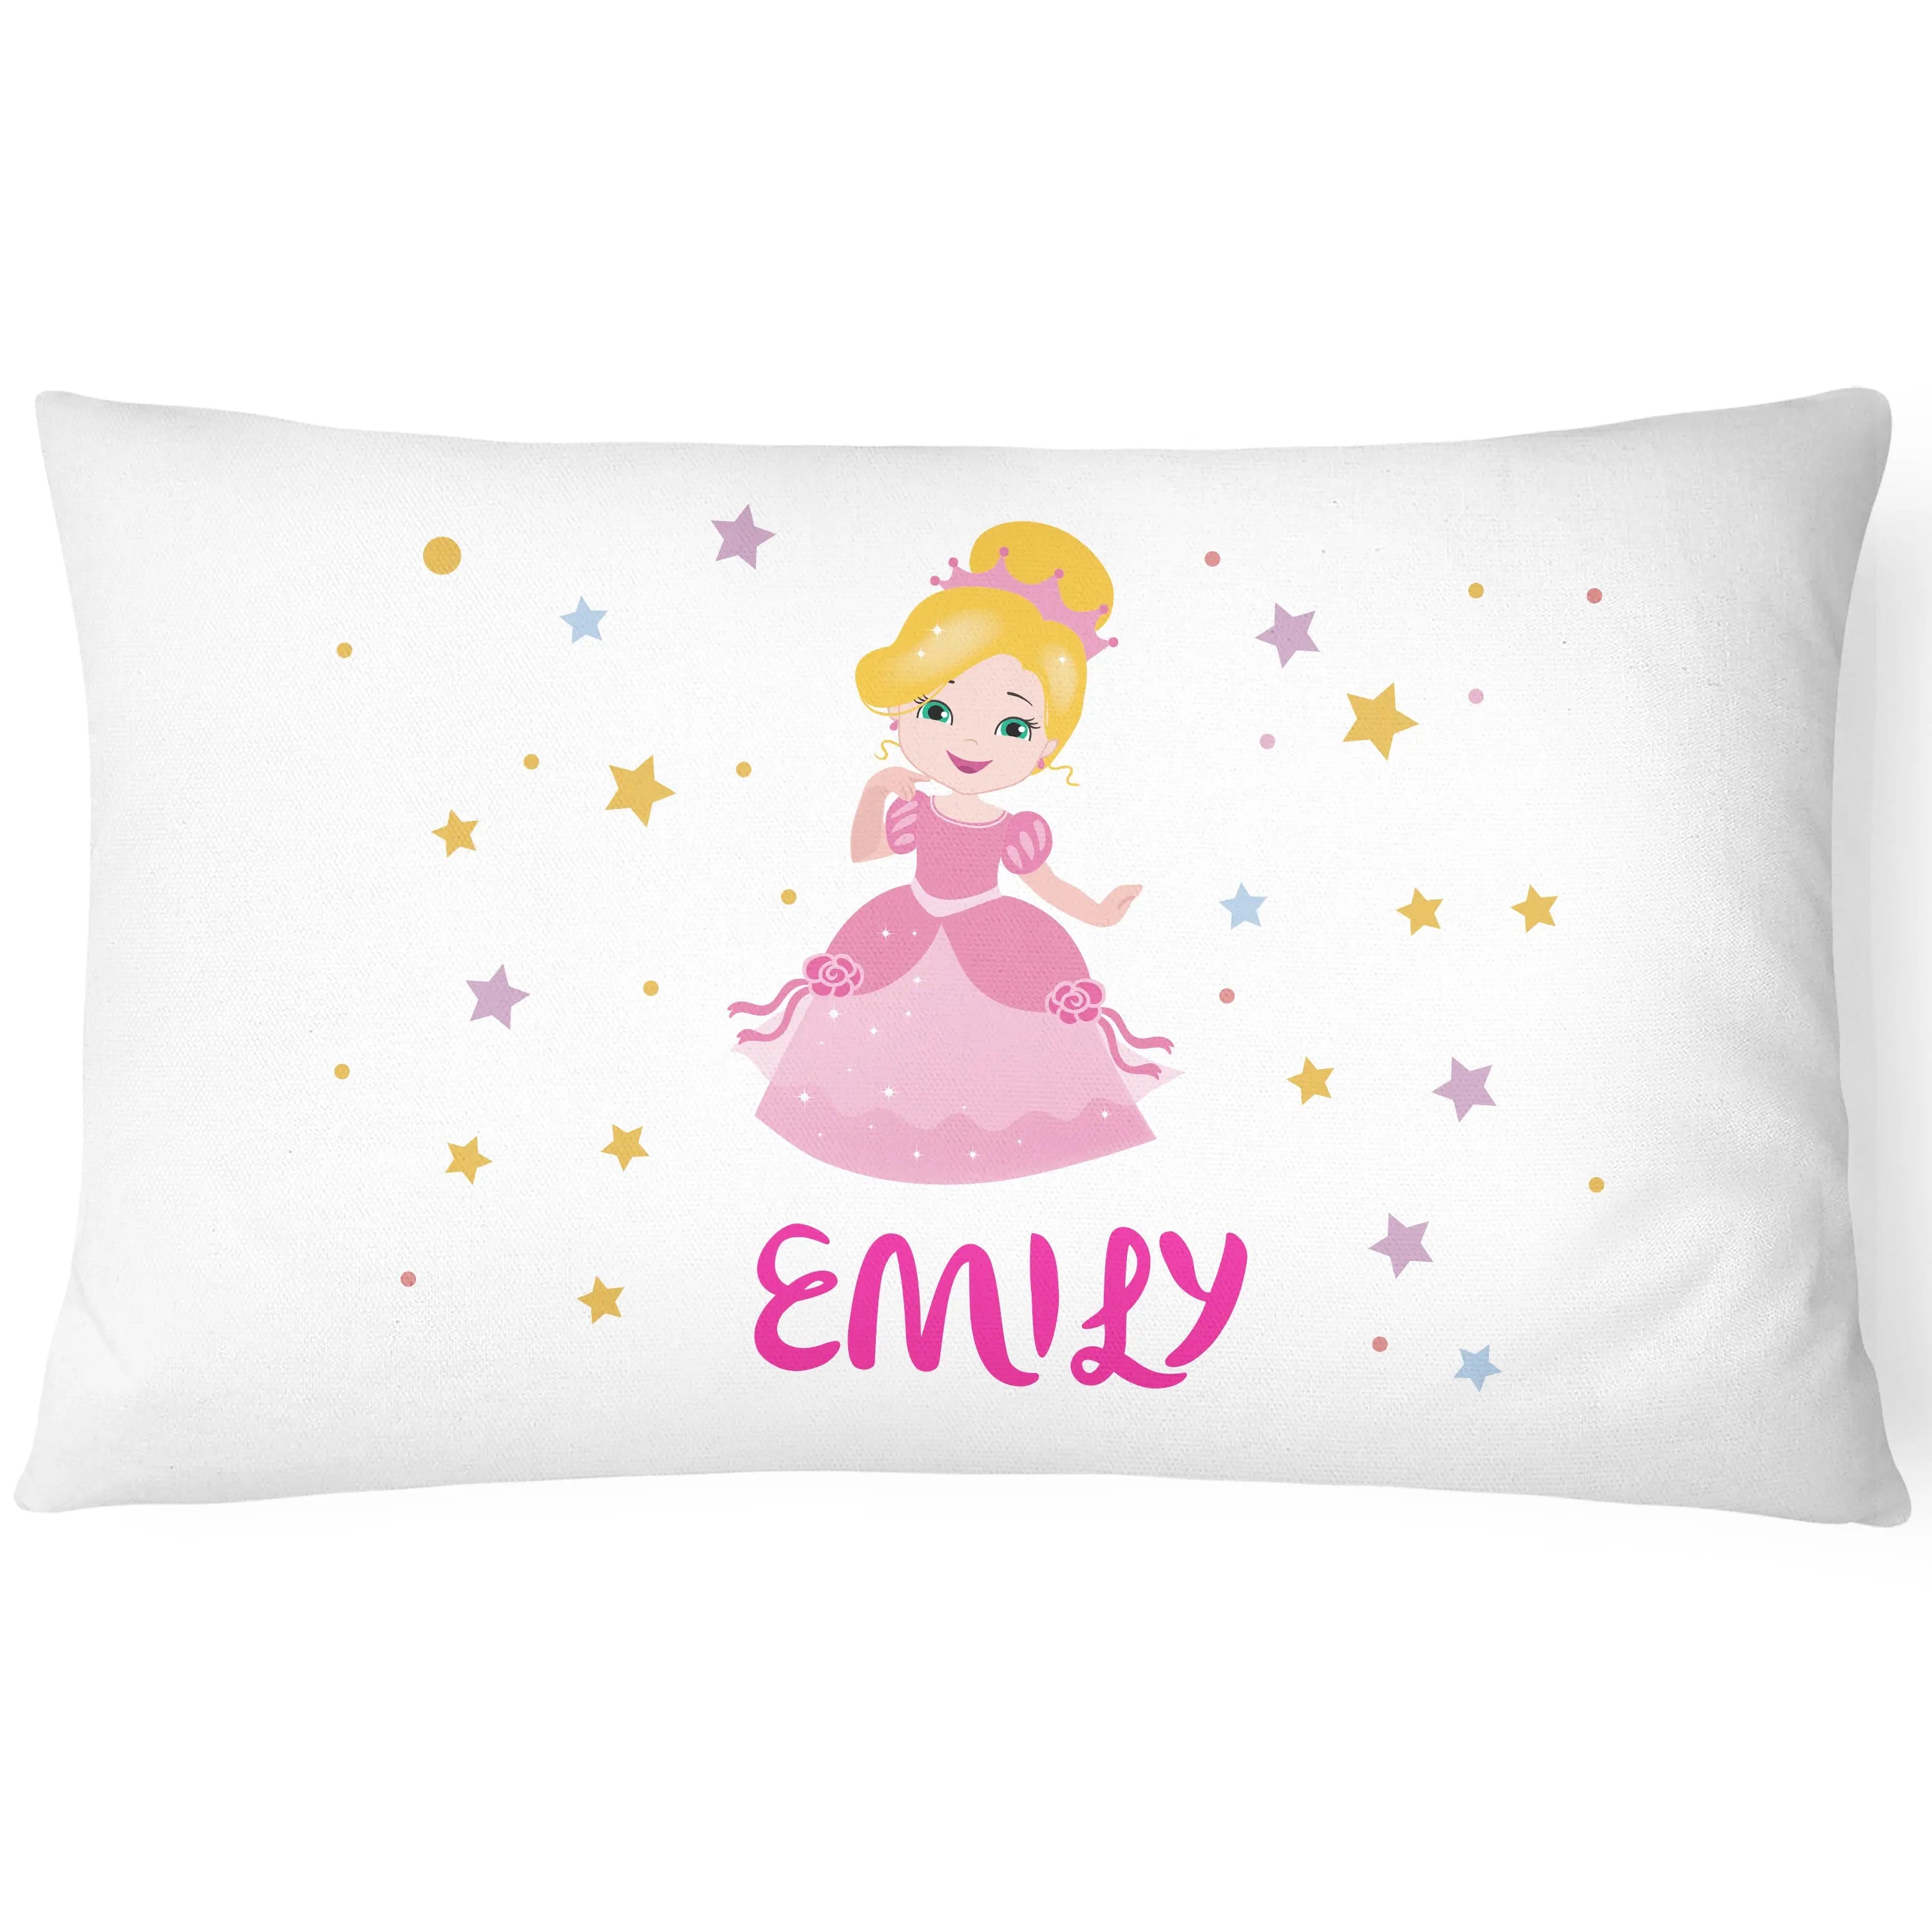 Personalised Princess Pillowcase - Pretty Pink - CushionPop